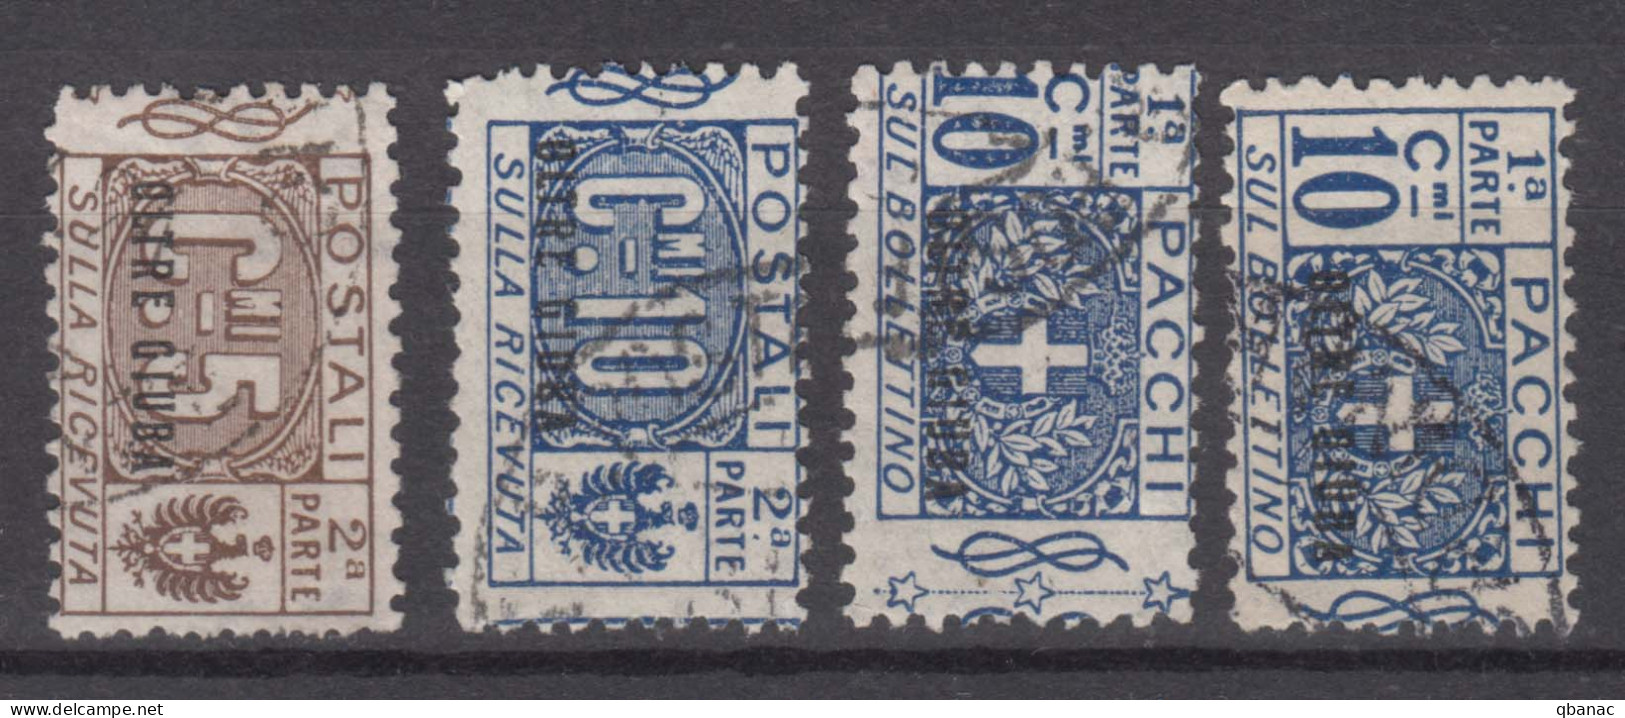 Italy Colonies Oltre Giuba 1925 Pacchi Postali Sassone#1,2 Separated Used - Oltre Giuba